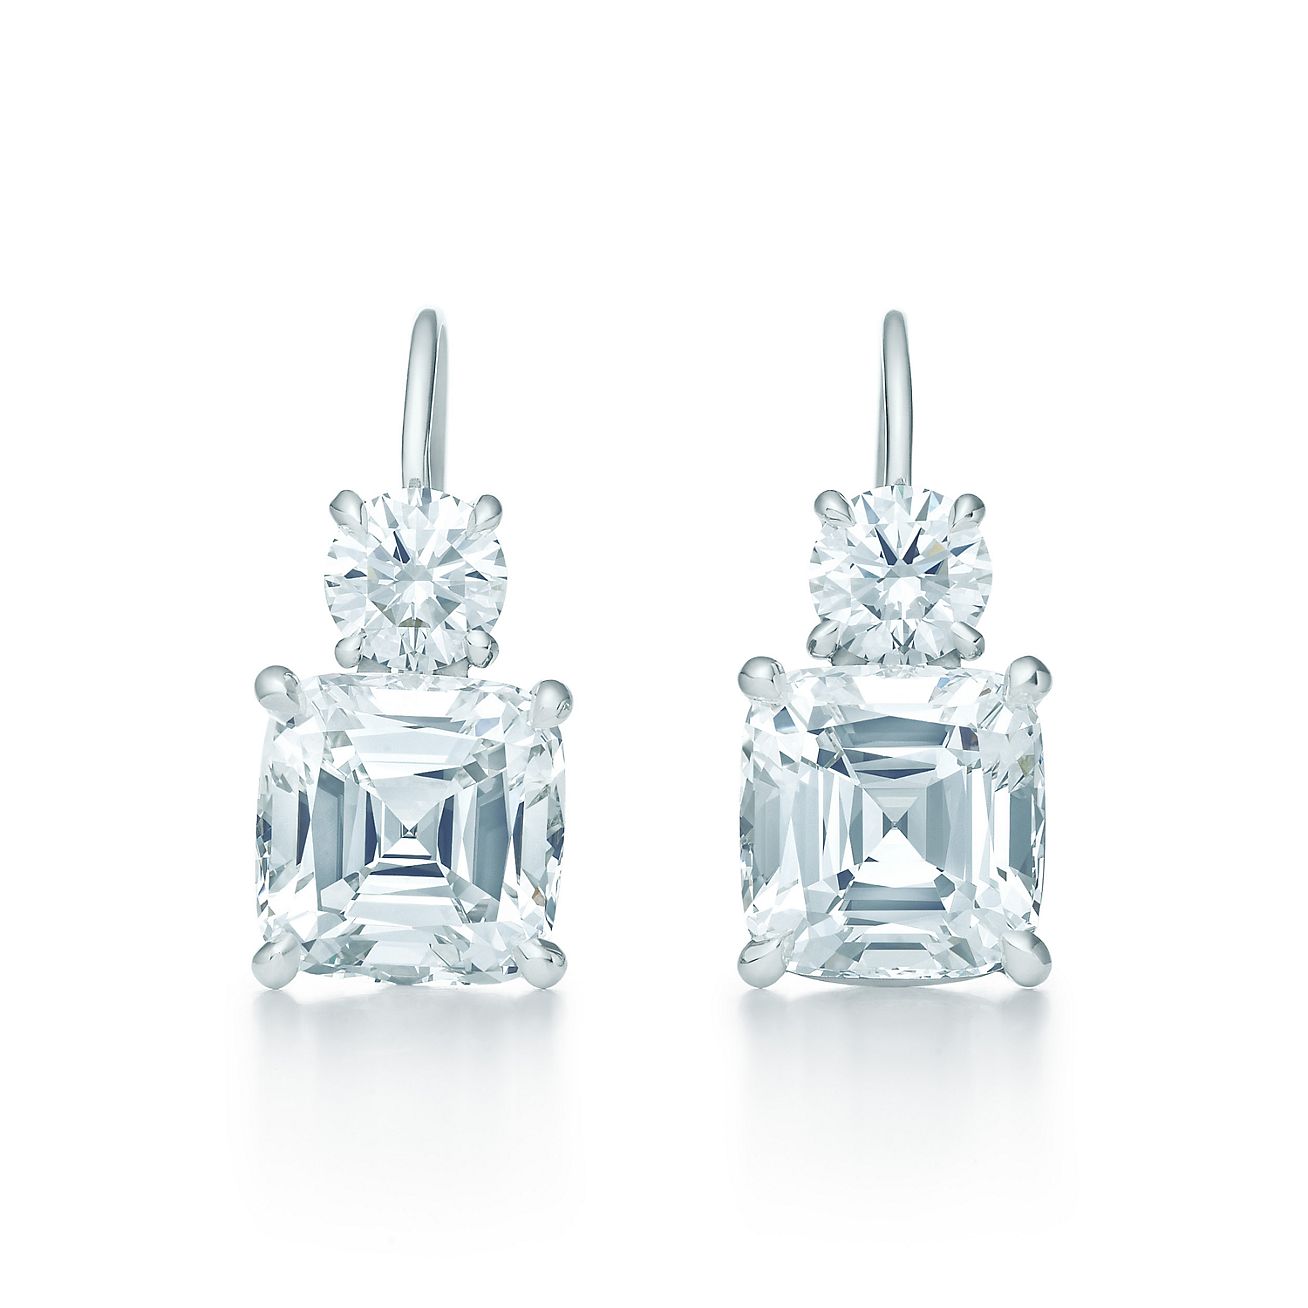 Tiffany Legacy™ earrings in platinum 